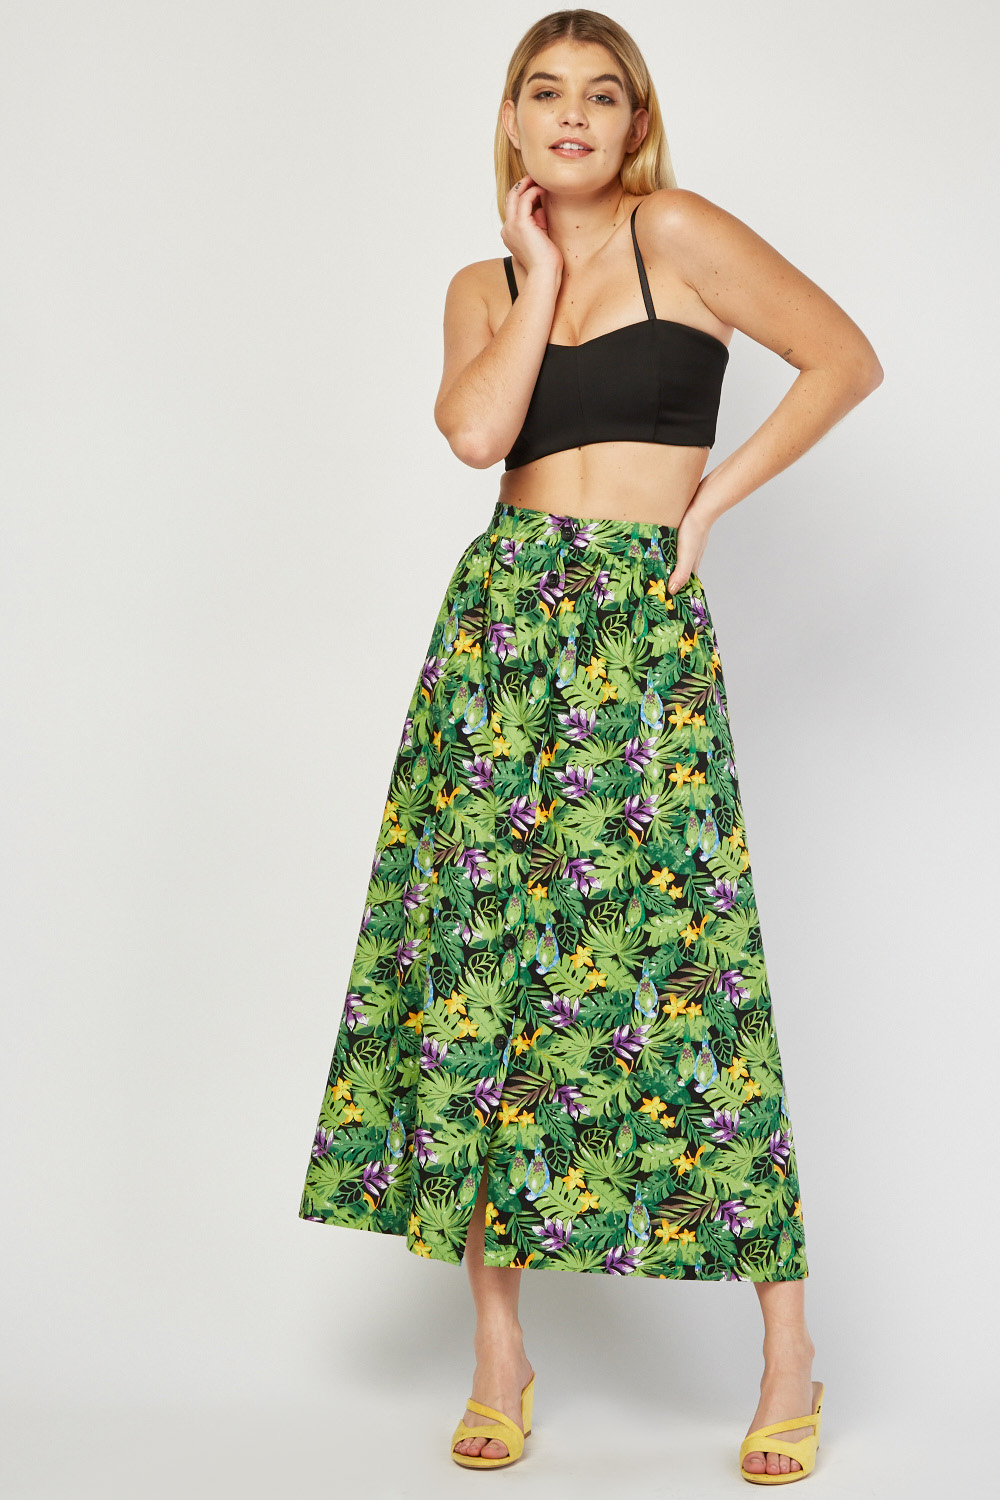 Tropical Printed Midi Skirt - Just $7